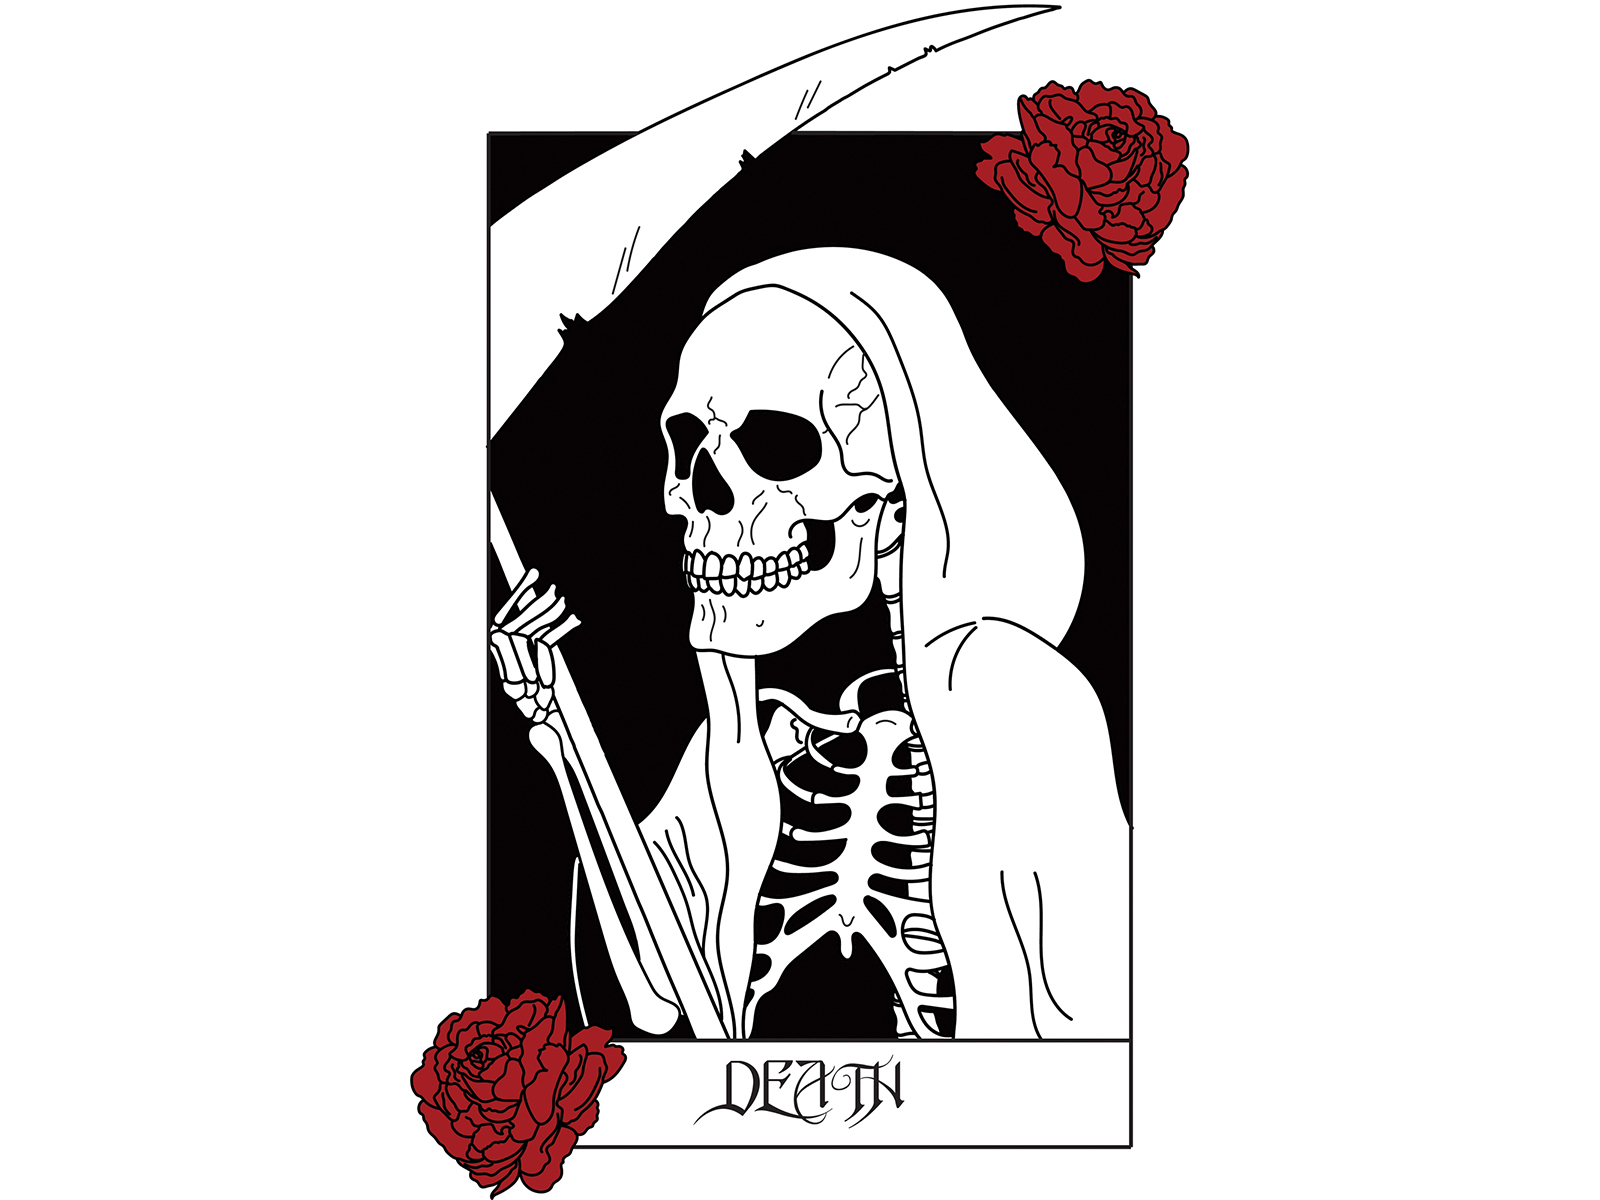 Death Tarot Card by Teodora Petkovic on Dribbble